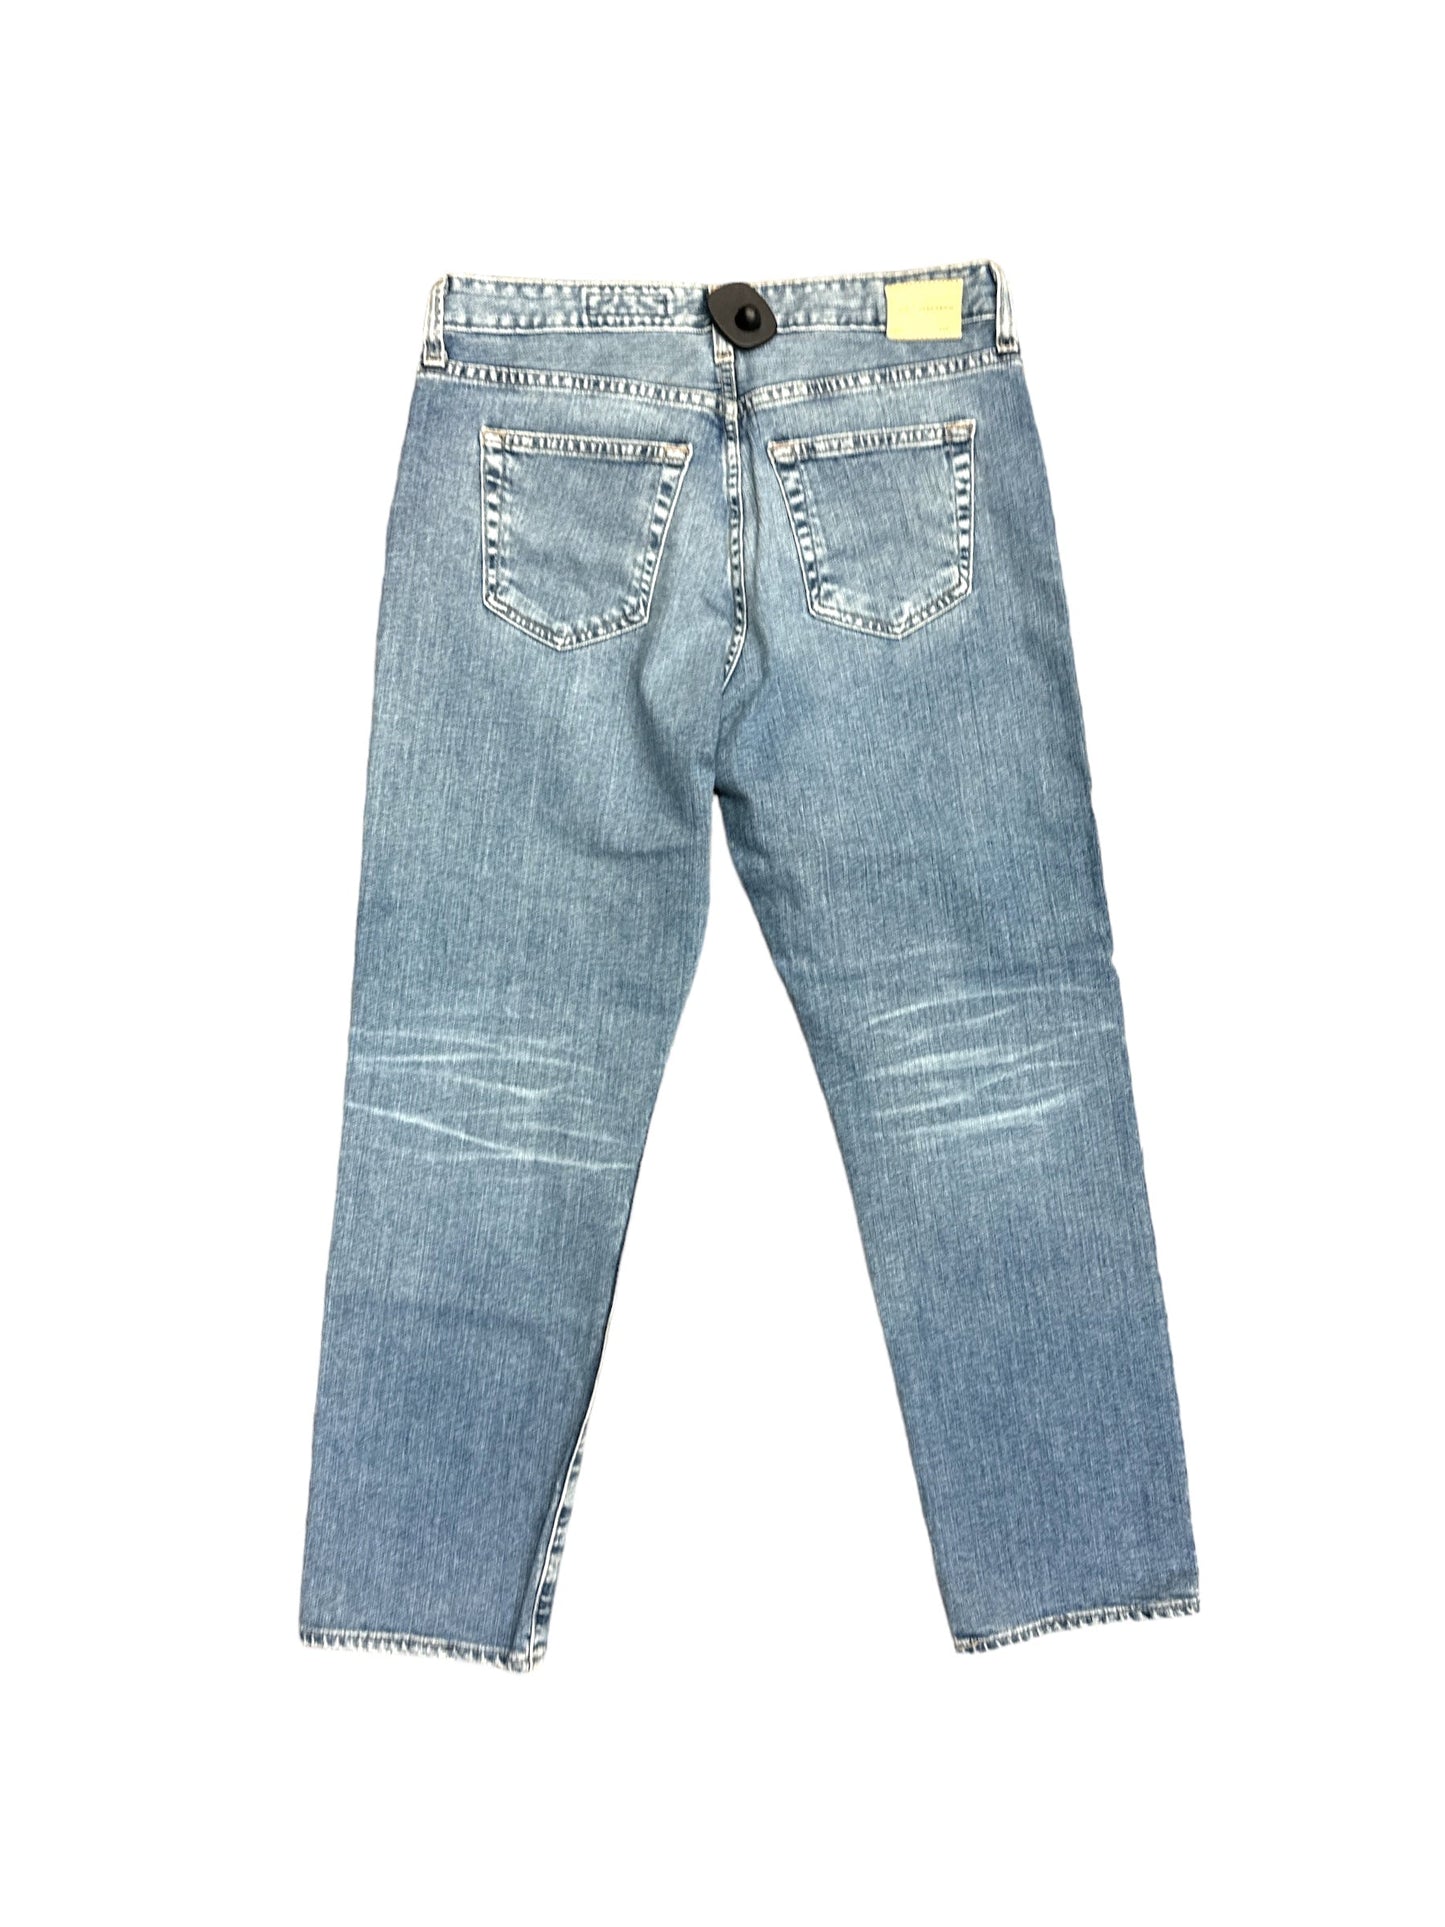 Blue Denim Jeans Designer Adriano Goldschmied, Size 8